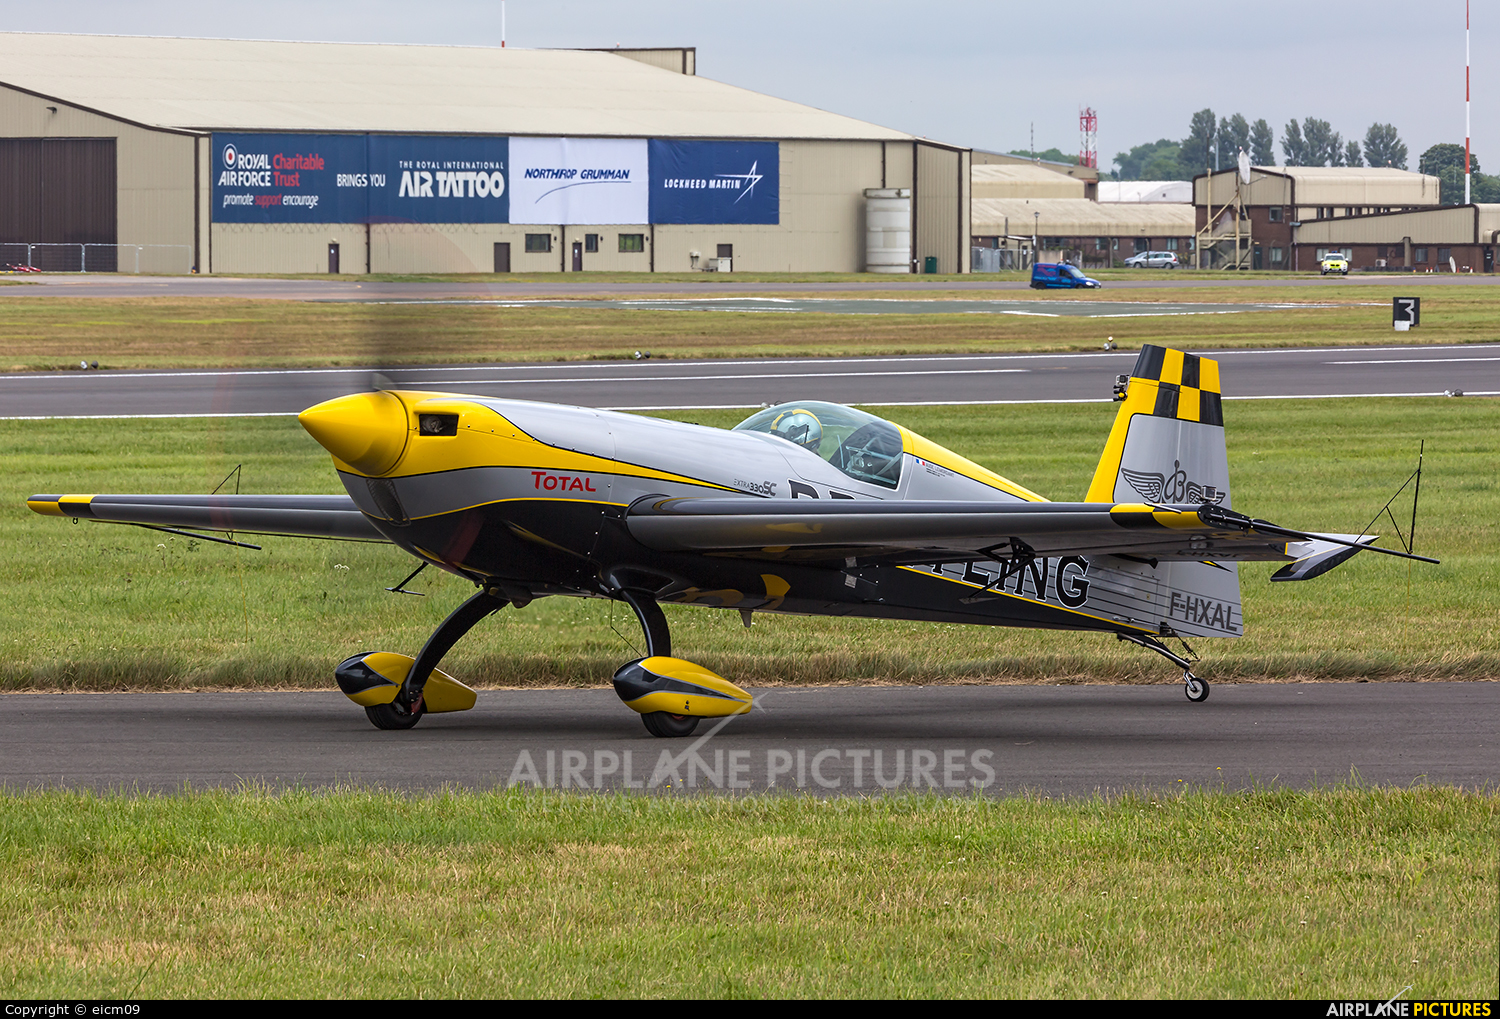 Aude Lemordant F-HXAL aircraft at Fairford